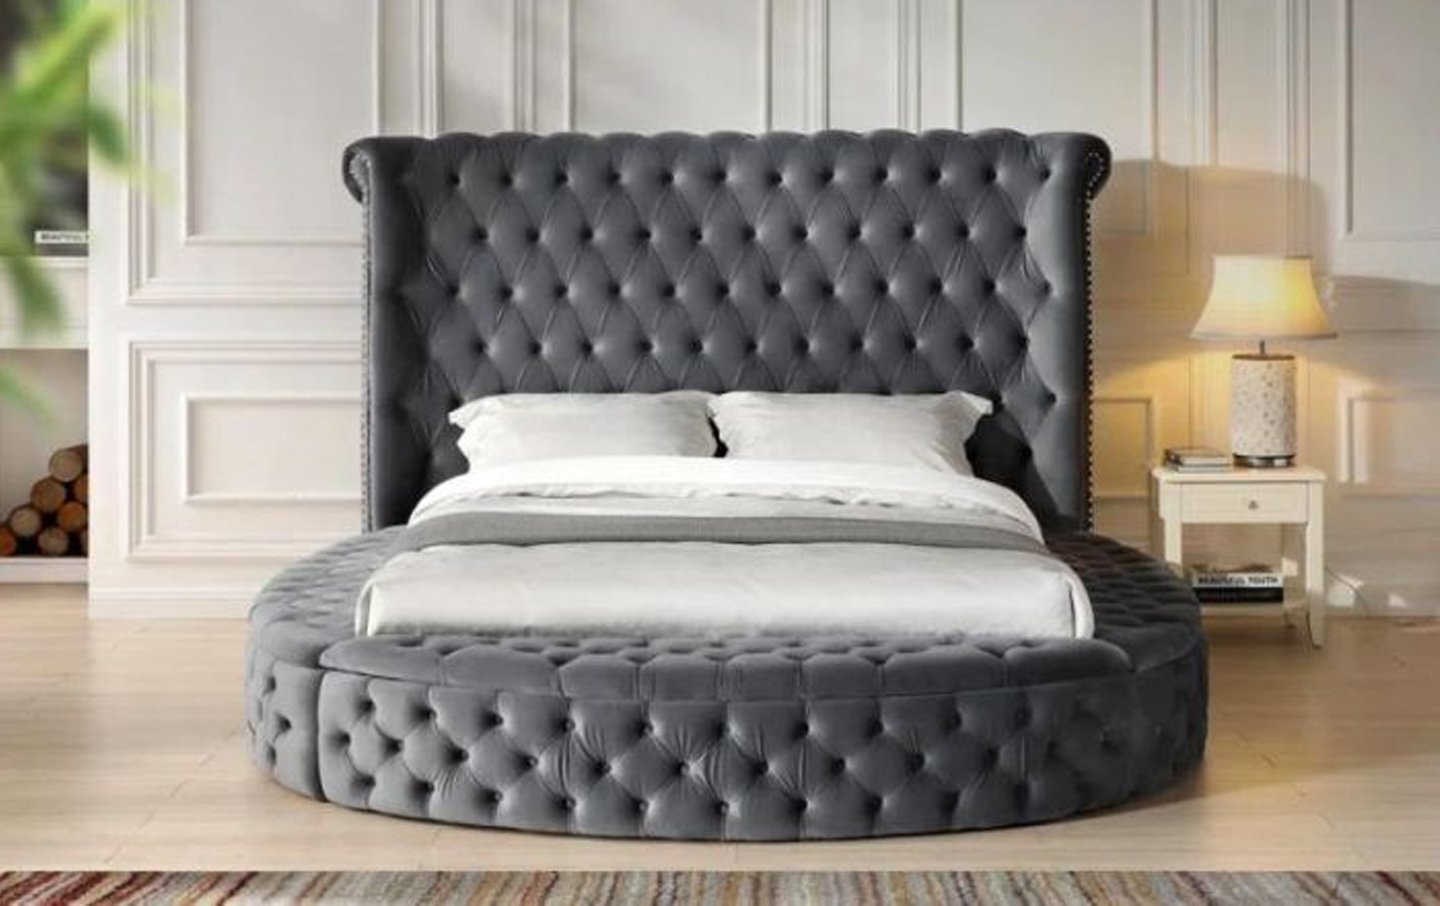 Luxus Gray Round Bed